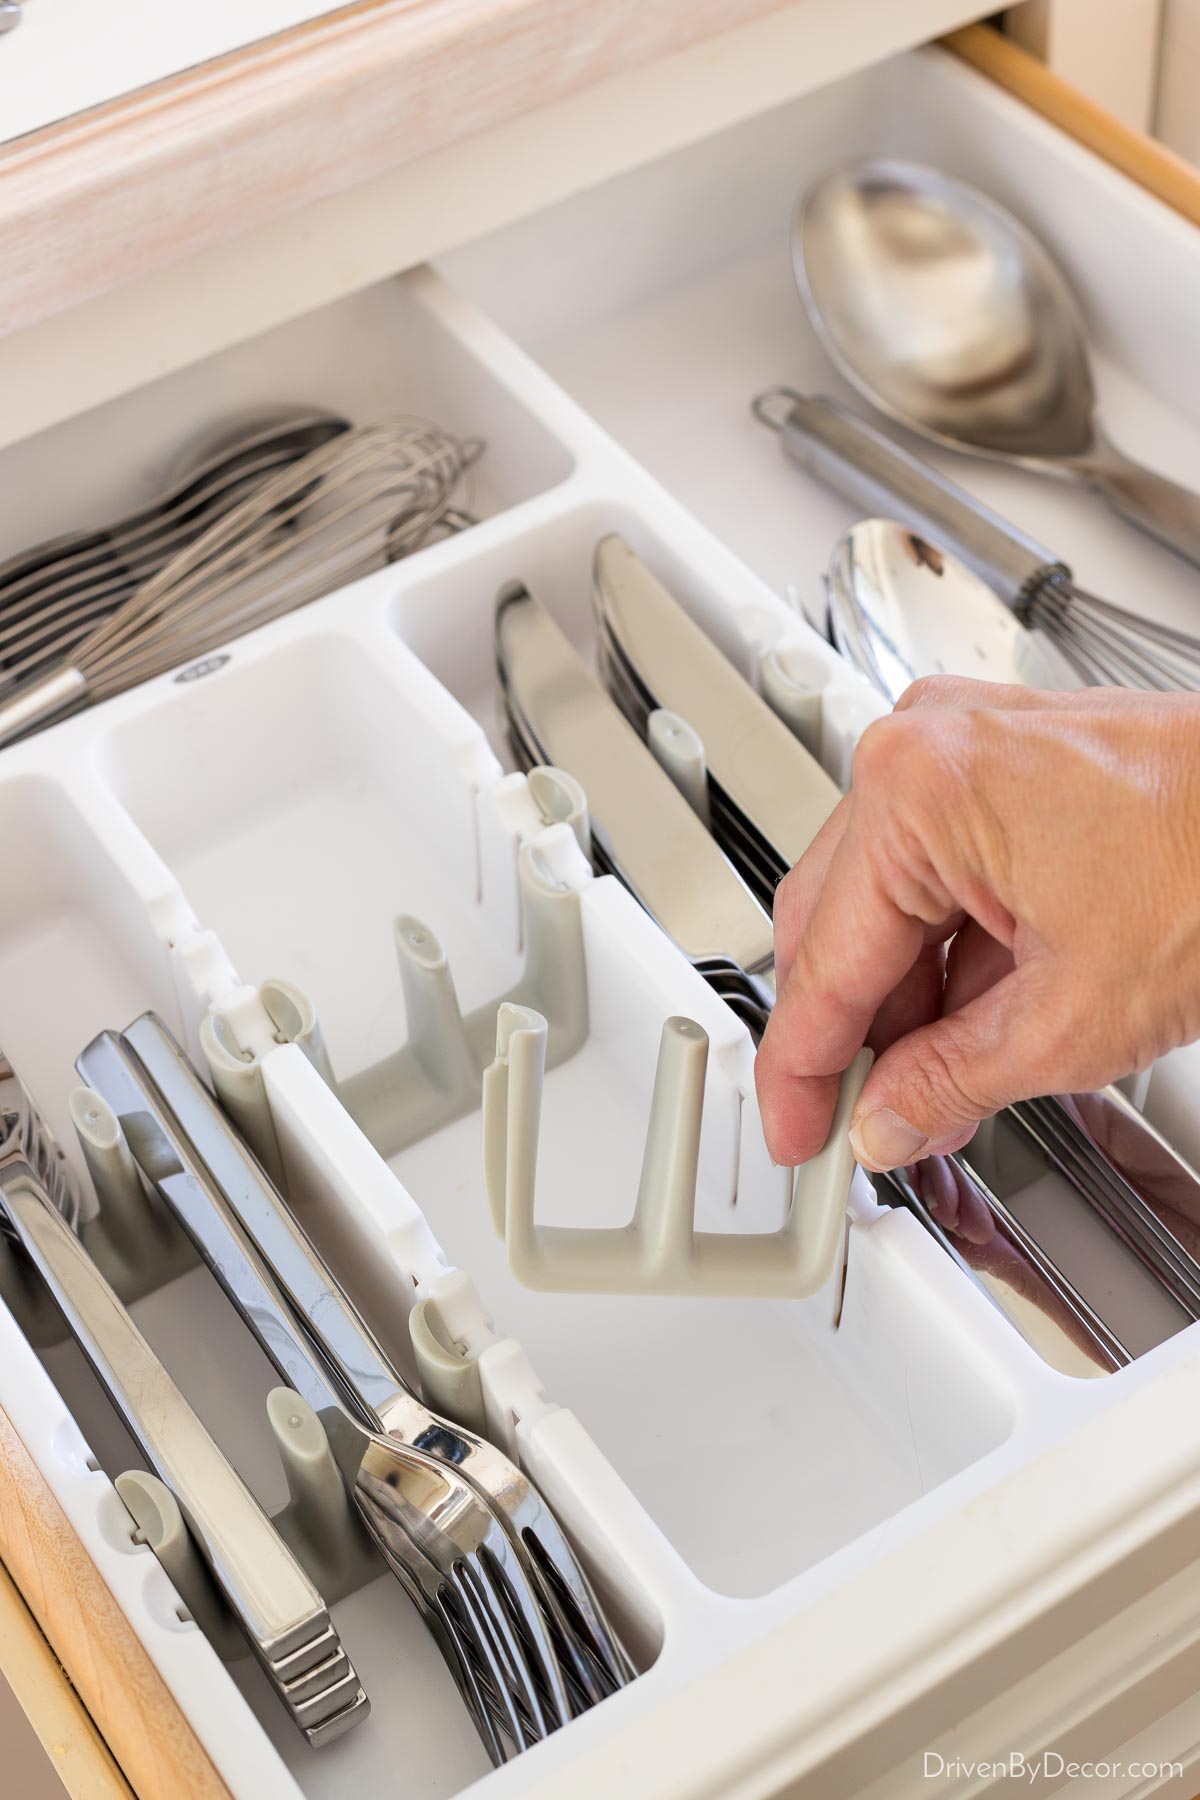 https://www.drivenbydecor.com/wp-content/uploads/2021/09/kitchen-drawer-organizers-cutlery.jpg